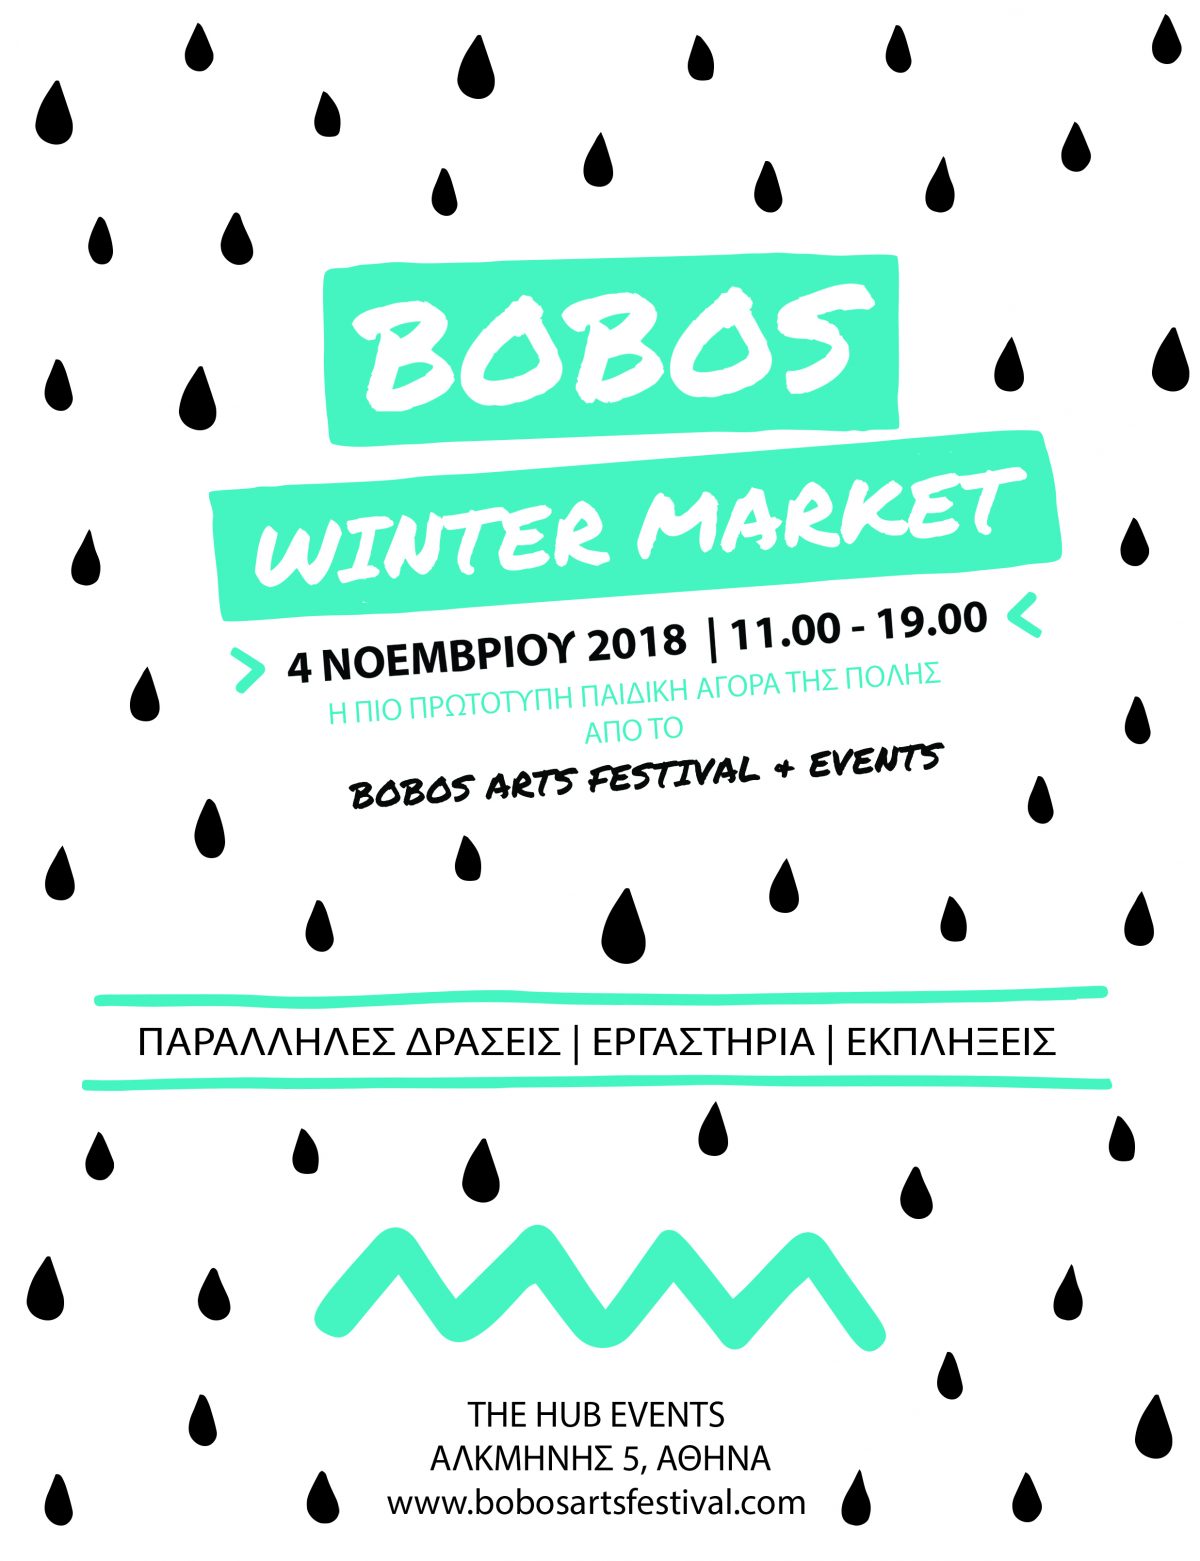 Bobos Winter Market – Μια ημέρα γεμάτη δημιουργικές συναντήσεις και δράσεις για το παιδί από το Bobos Arts Festival & Events